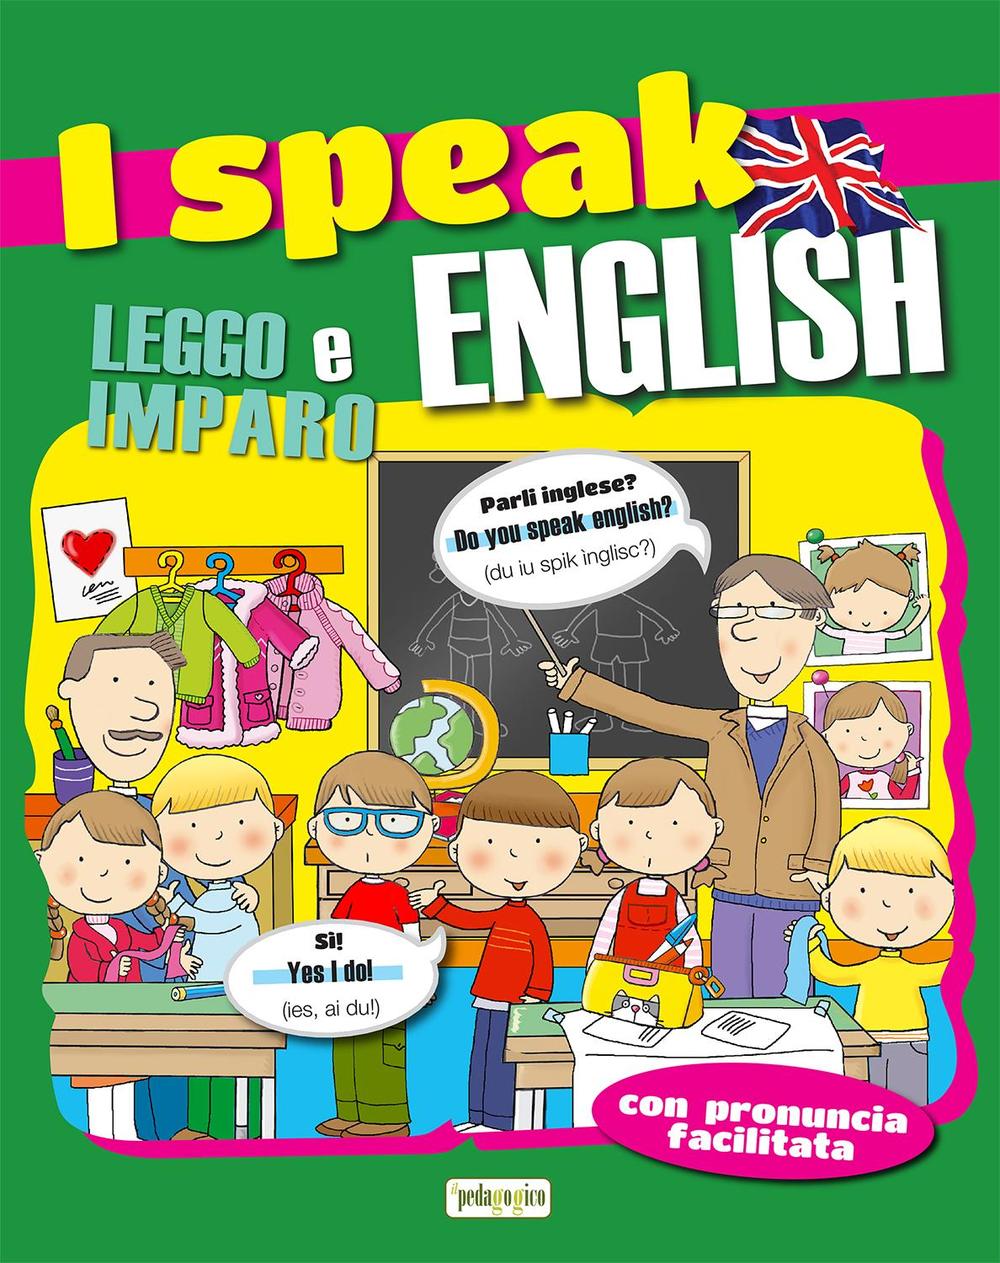 I speak english